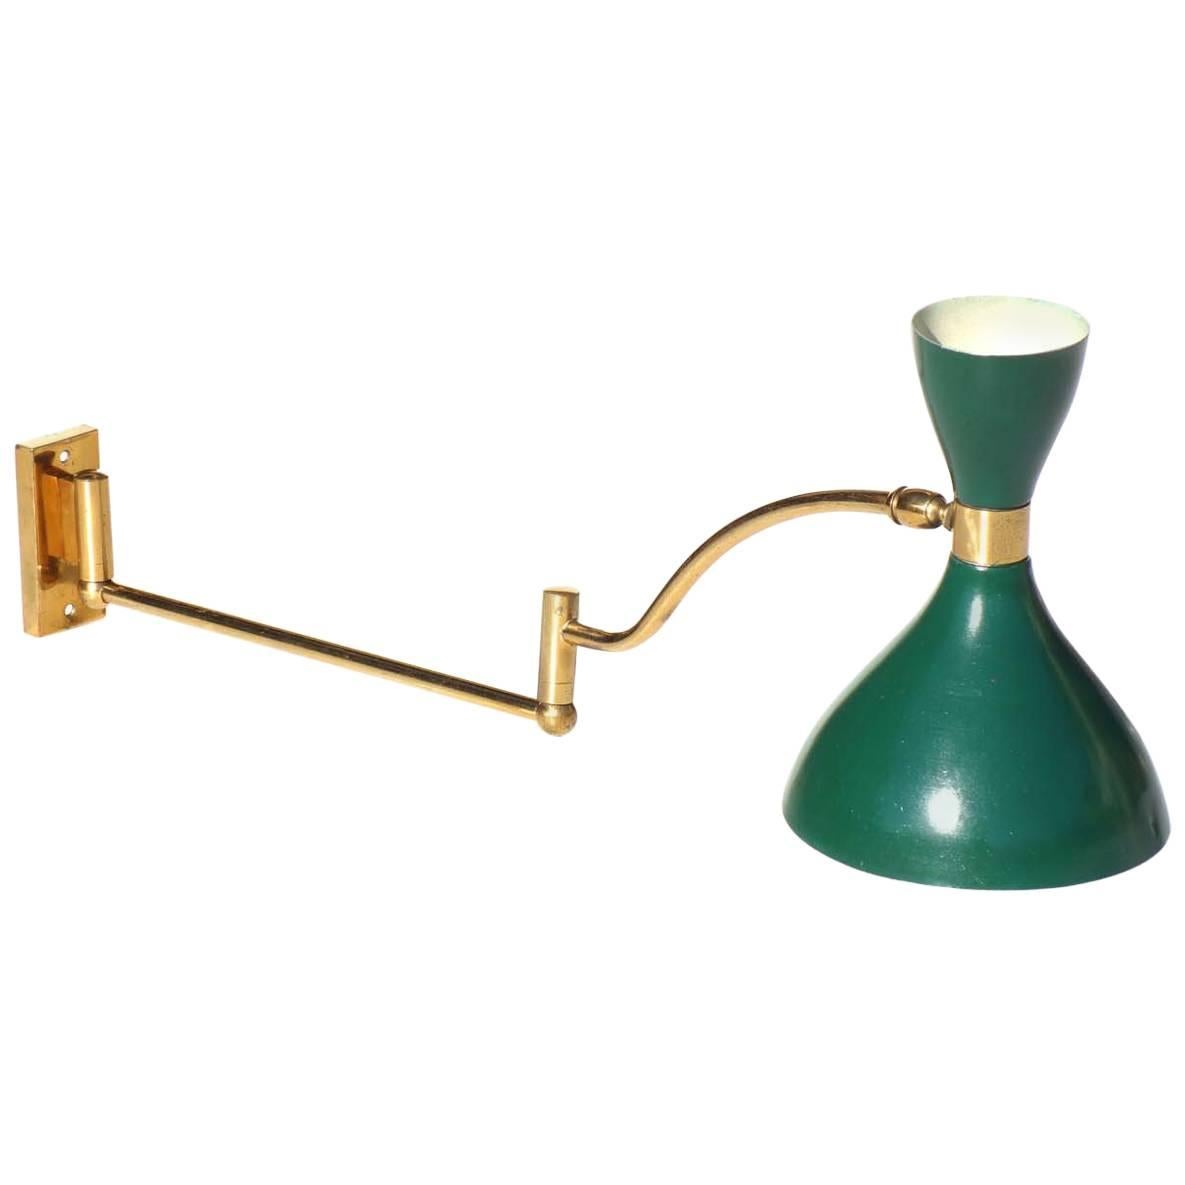 1950s by Stilnovo Italian Design Brass Green Applique Adjustable Wall Lamp